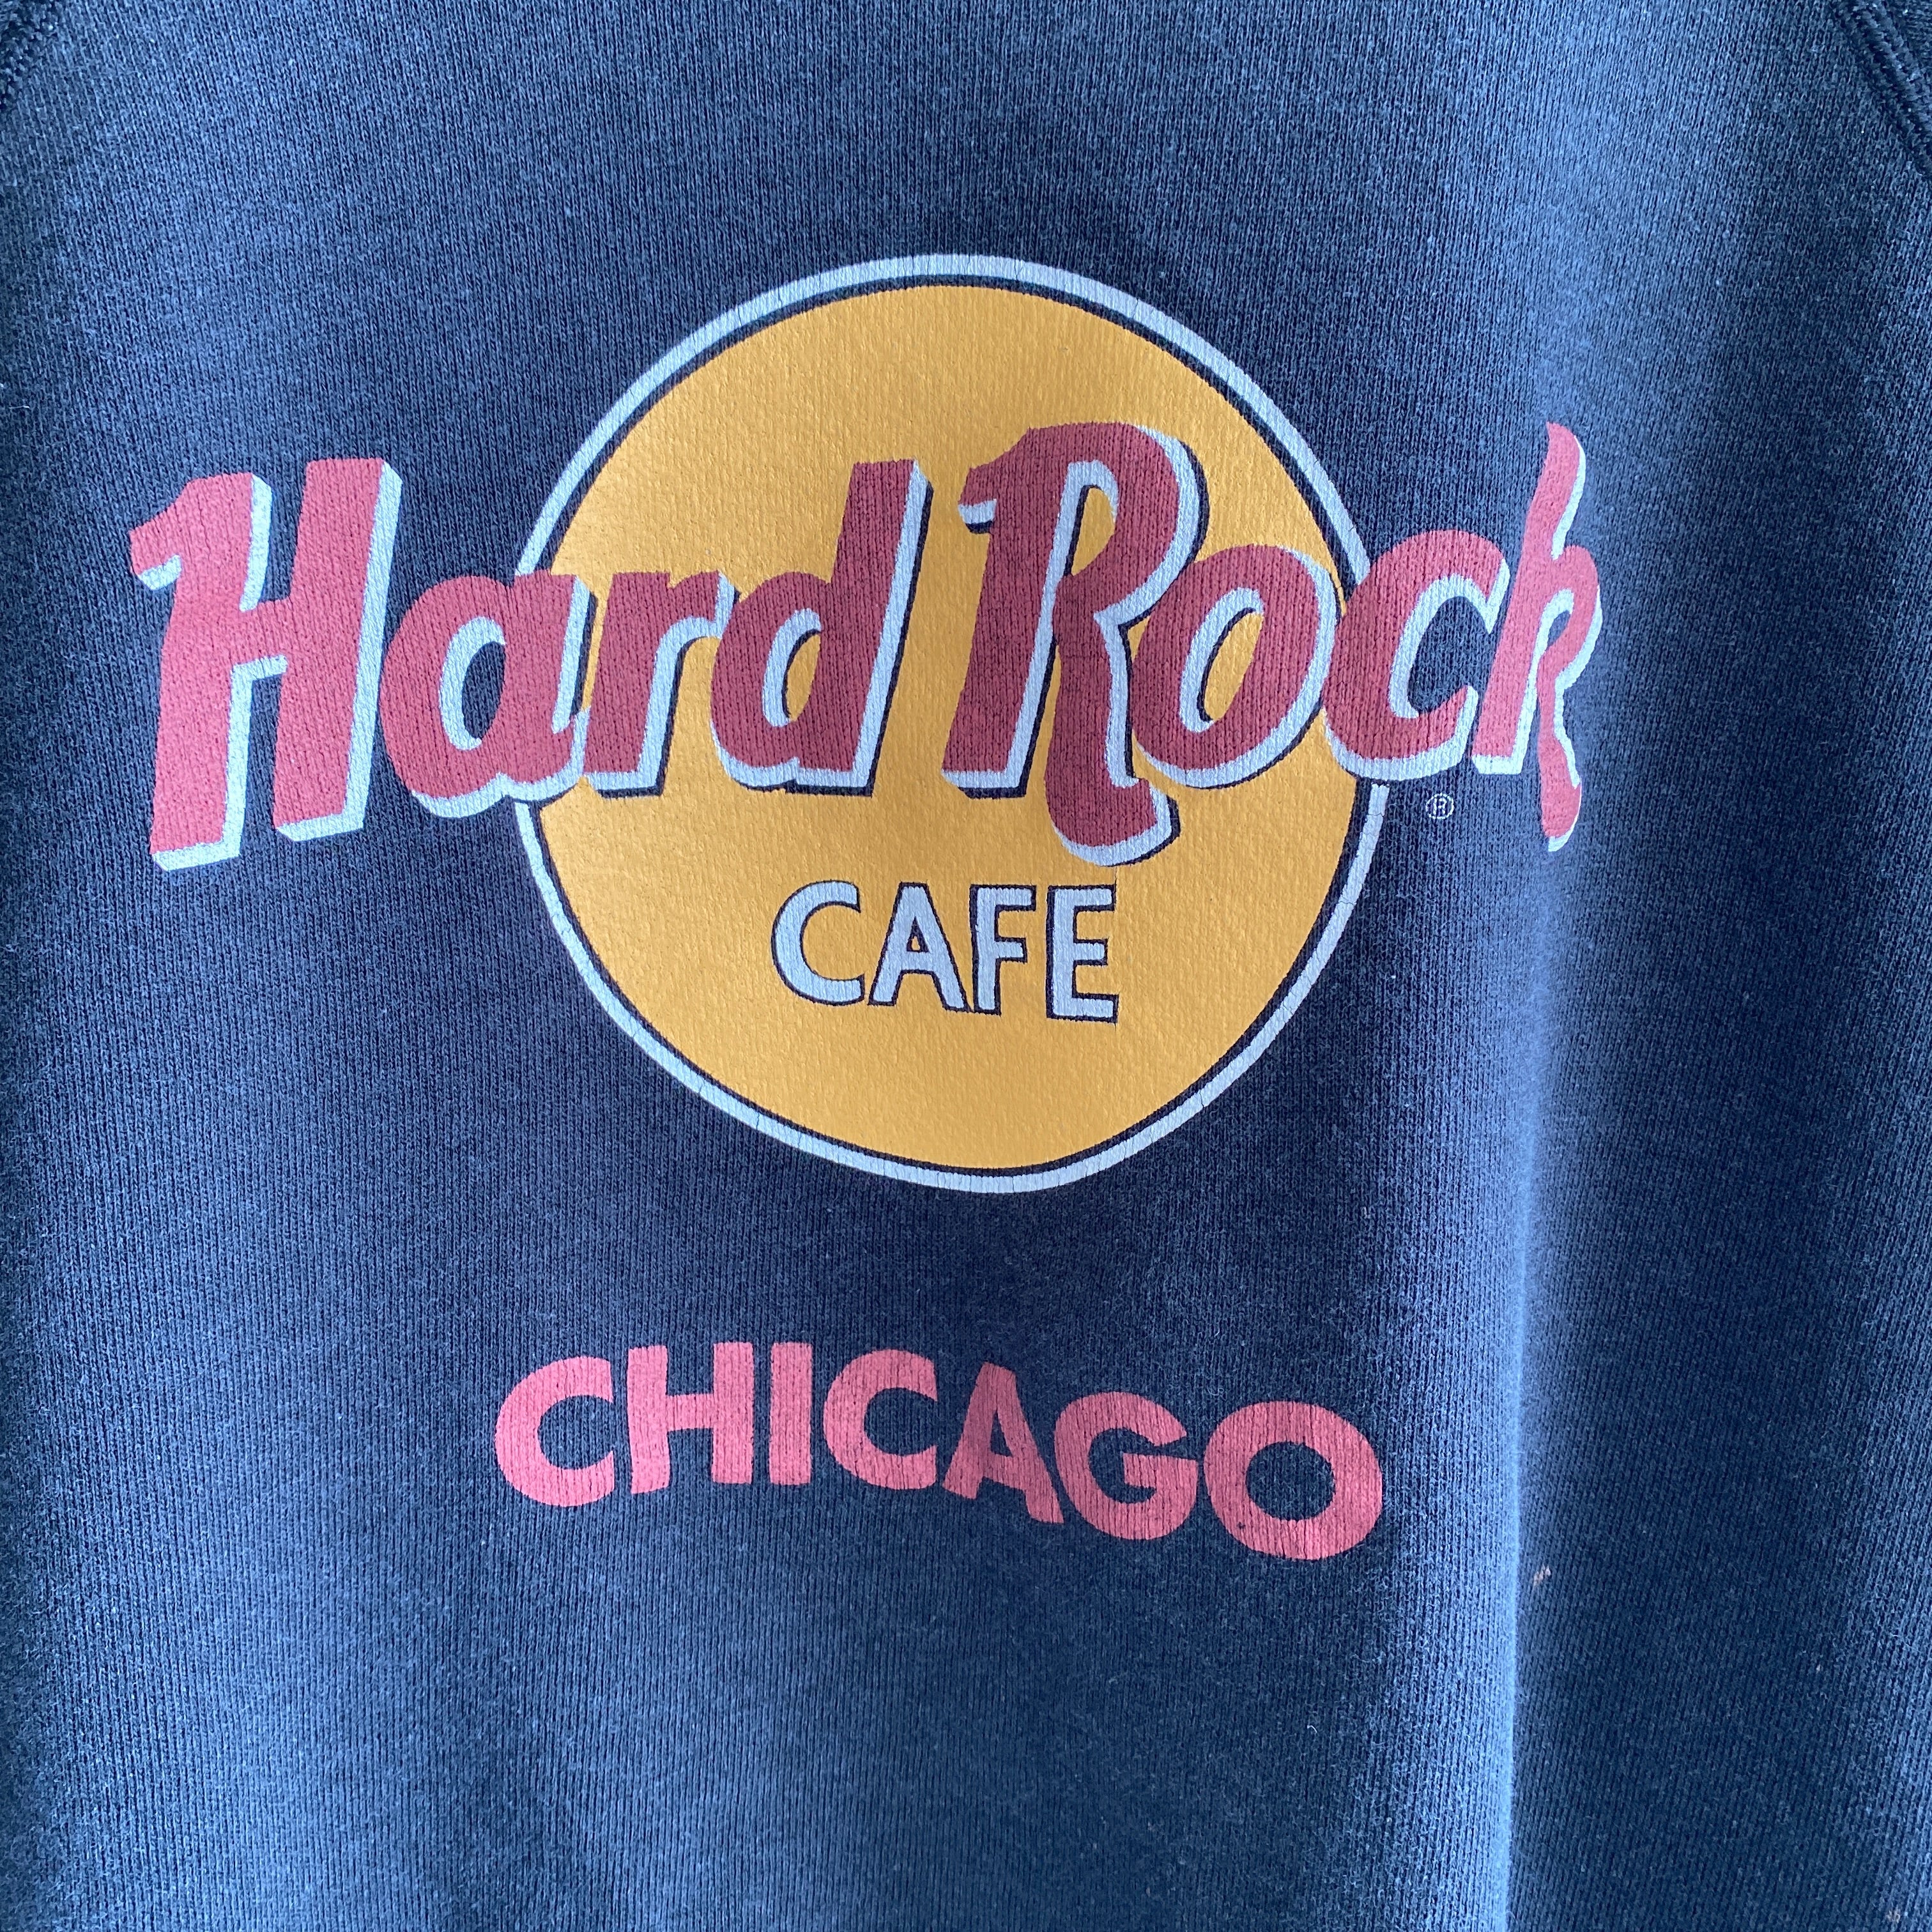 1980s Hard Rock Cafe Chicago Sweatshirt by Hanes